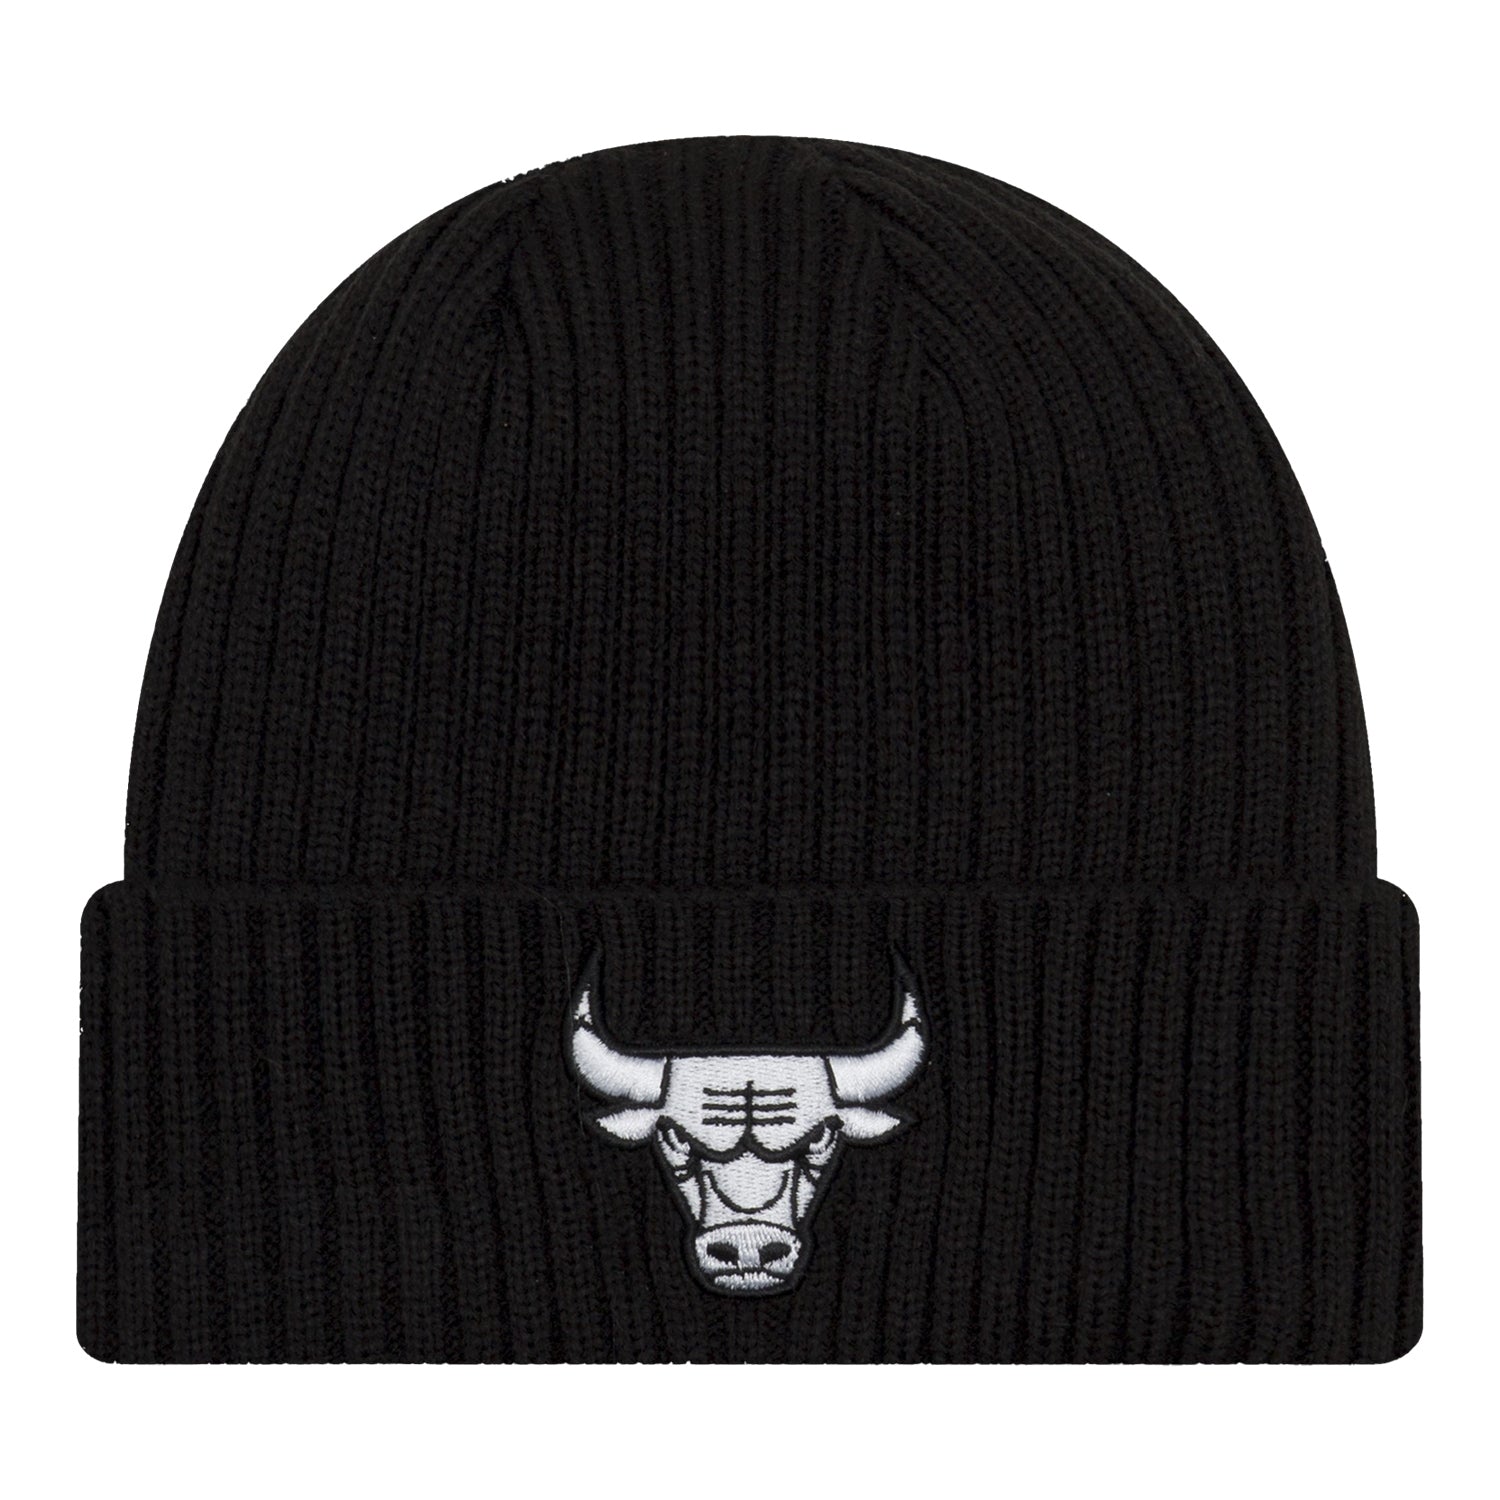 Chicago Bulls New Era Icon Cuff Beanie Knit Hat - Front View